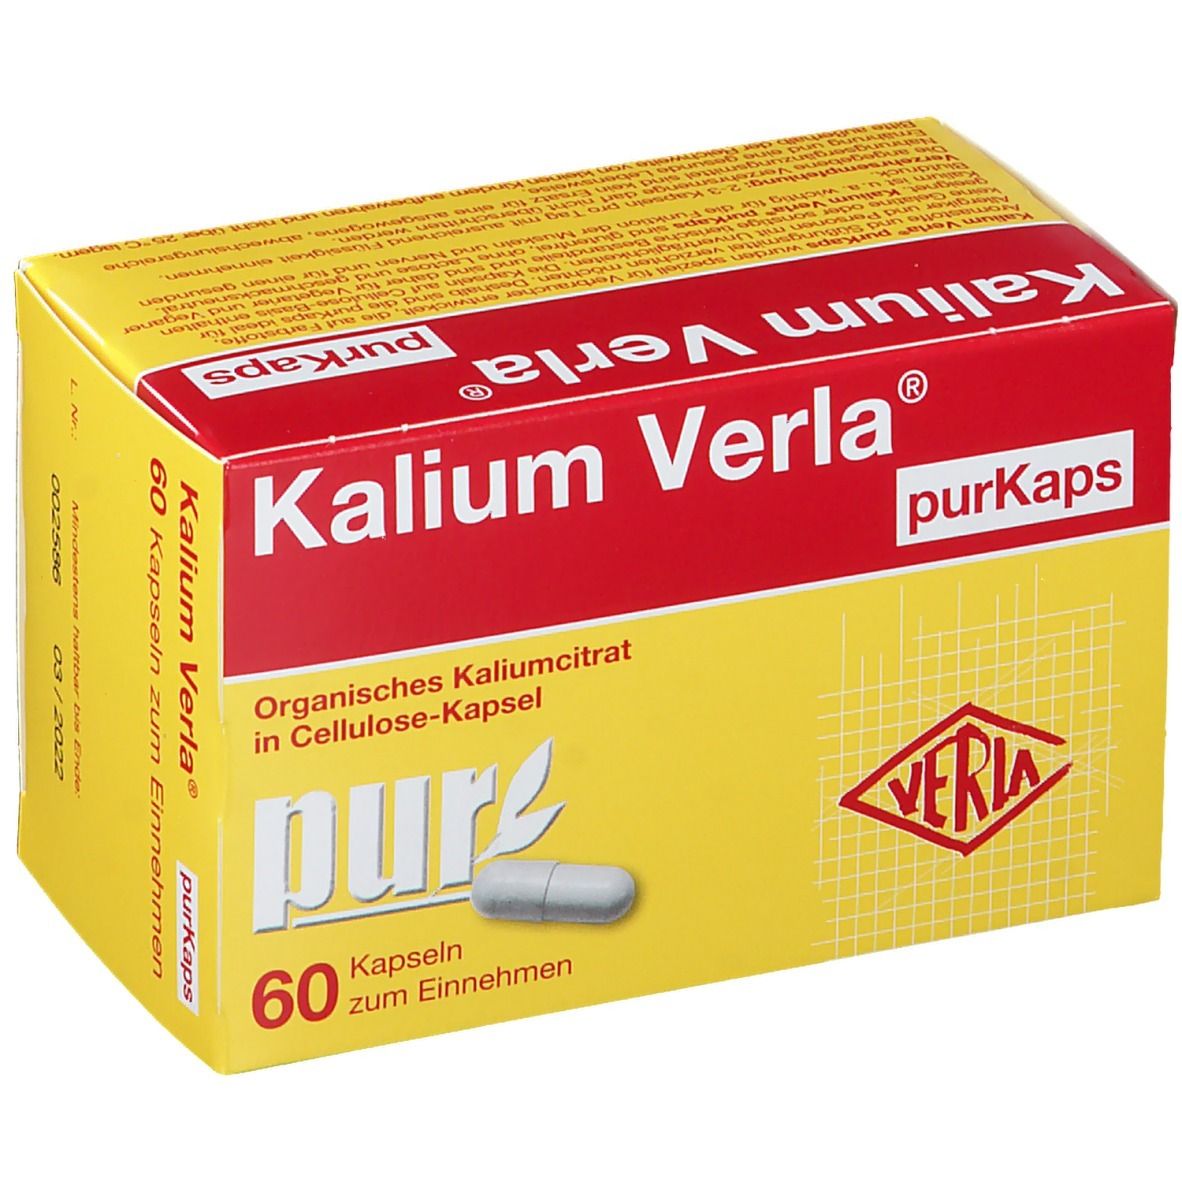 Kalium Verla® purKaps